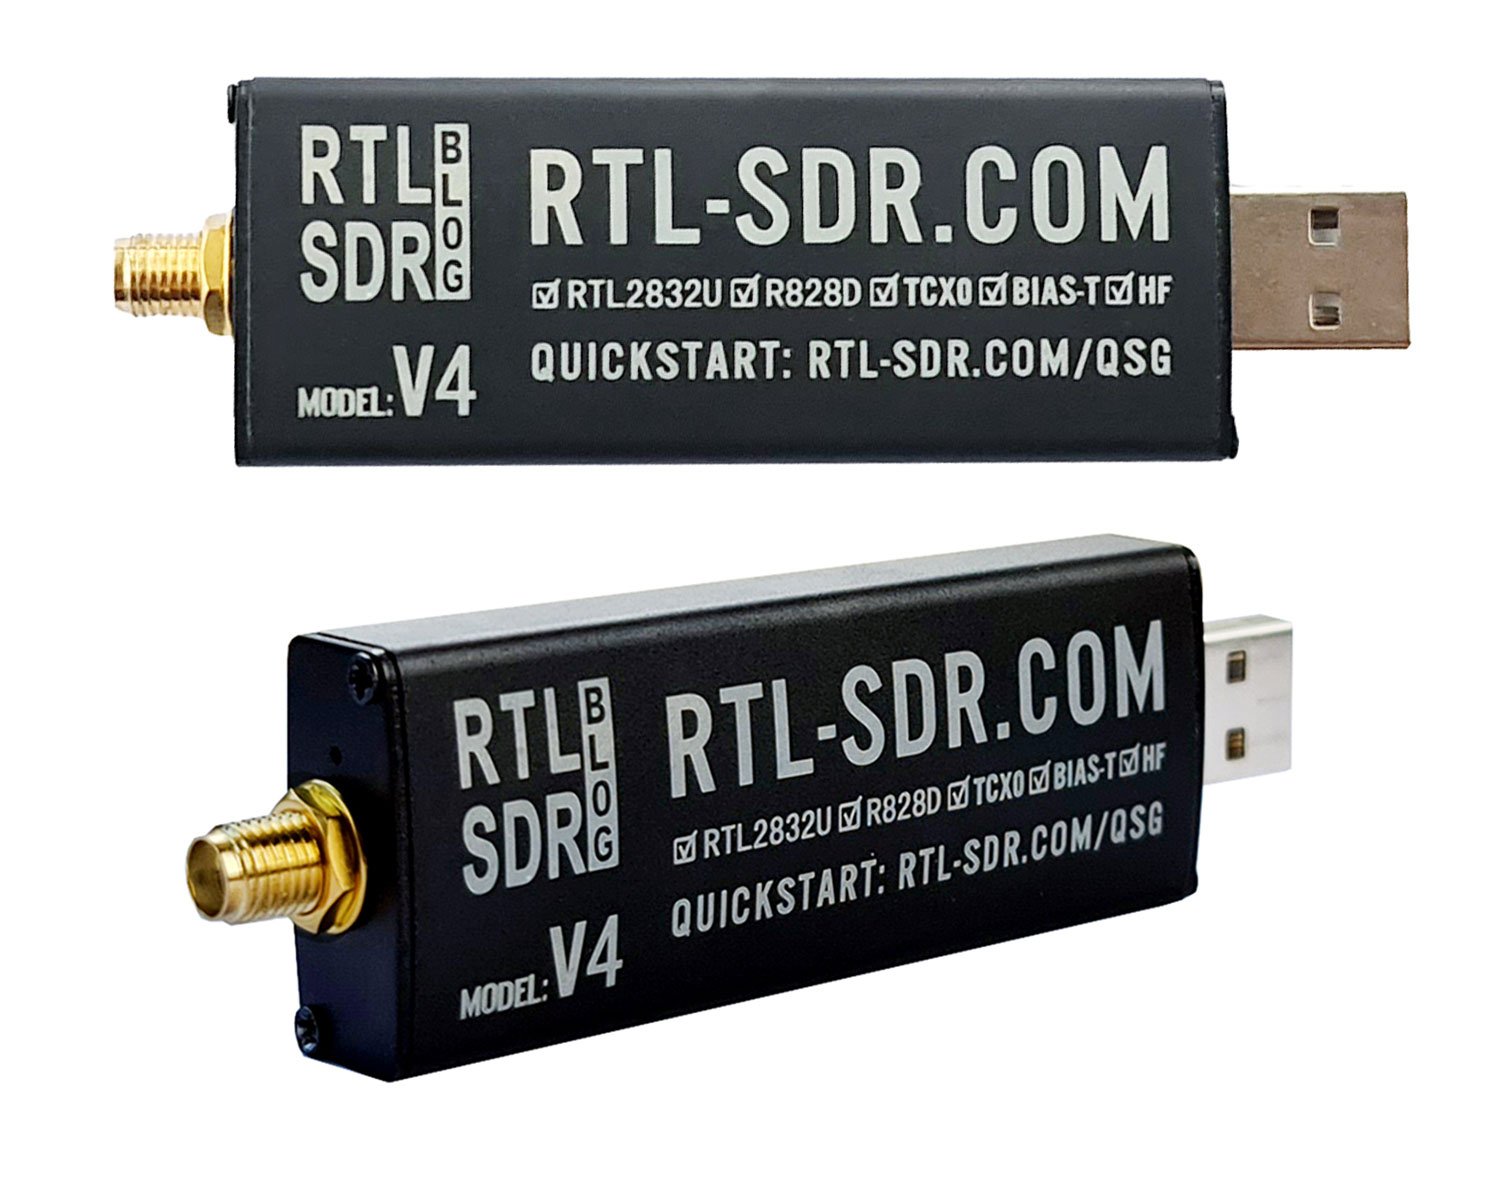 An off-the-shelf RTL-SDR unit.